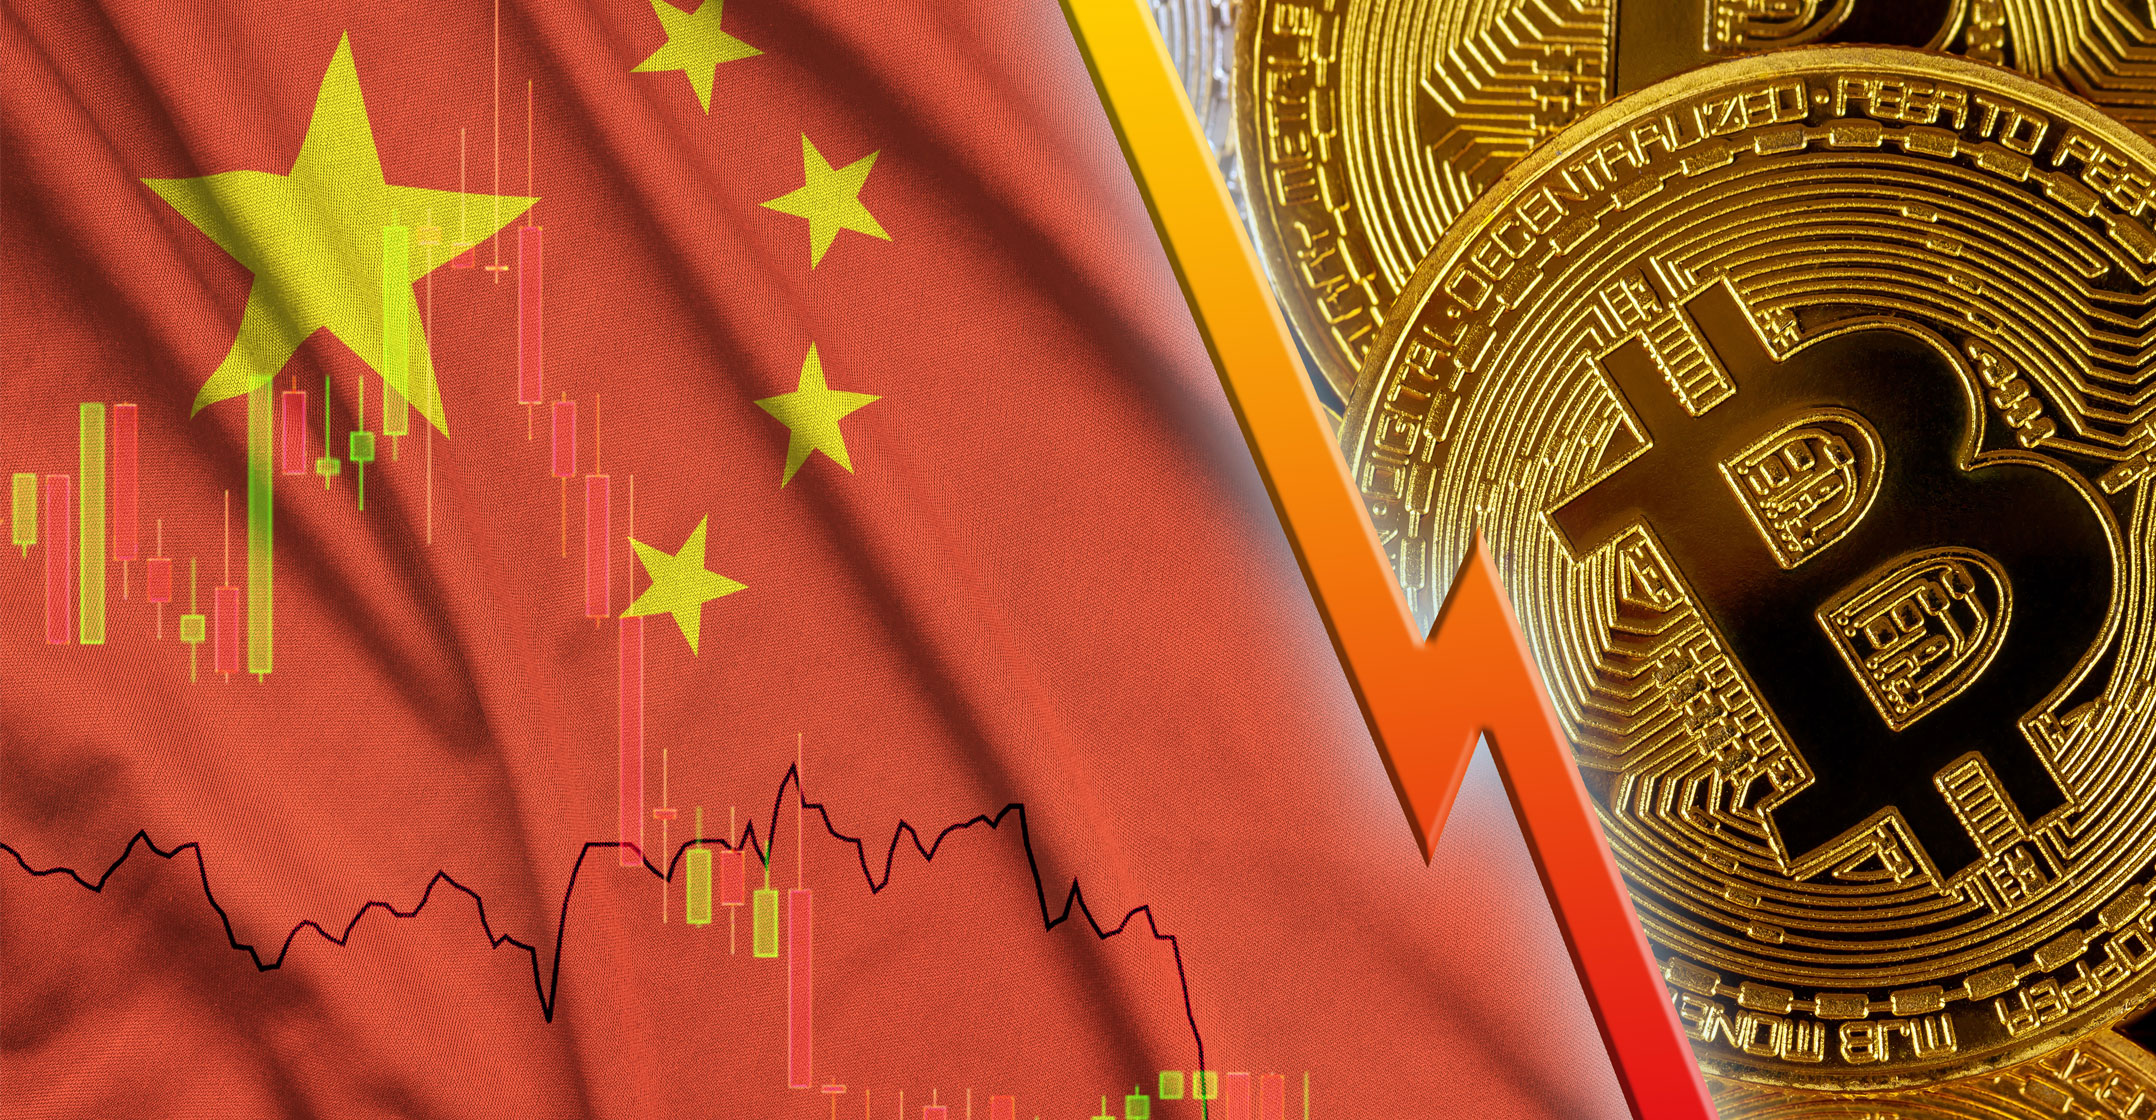 china crypto mining regulations